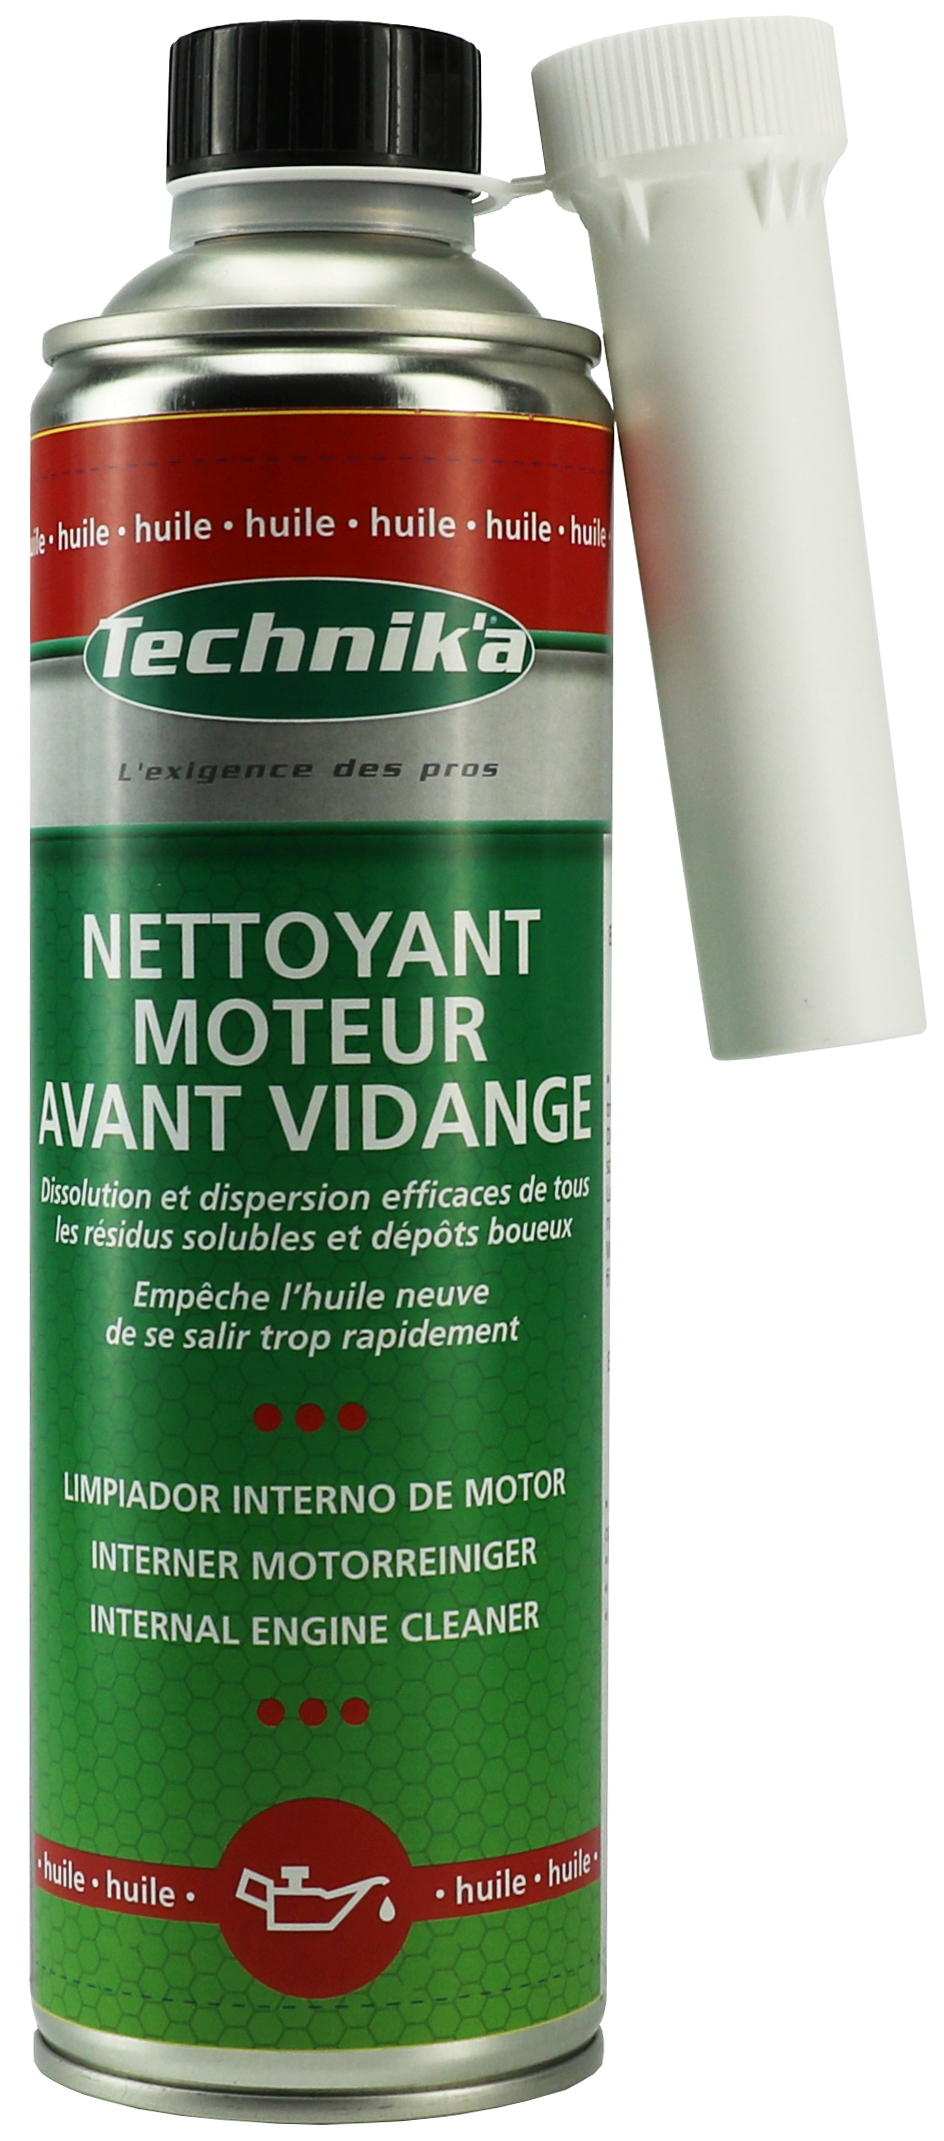 Additifs huile - Nettoyant moteur avant vidange Technik'a 860106